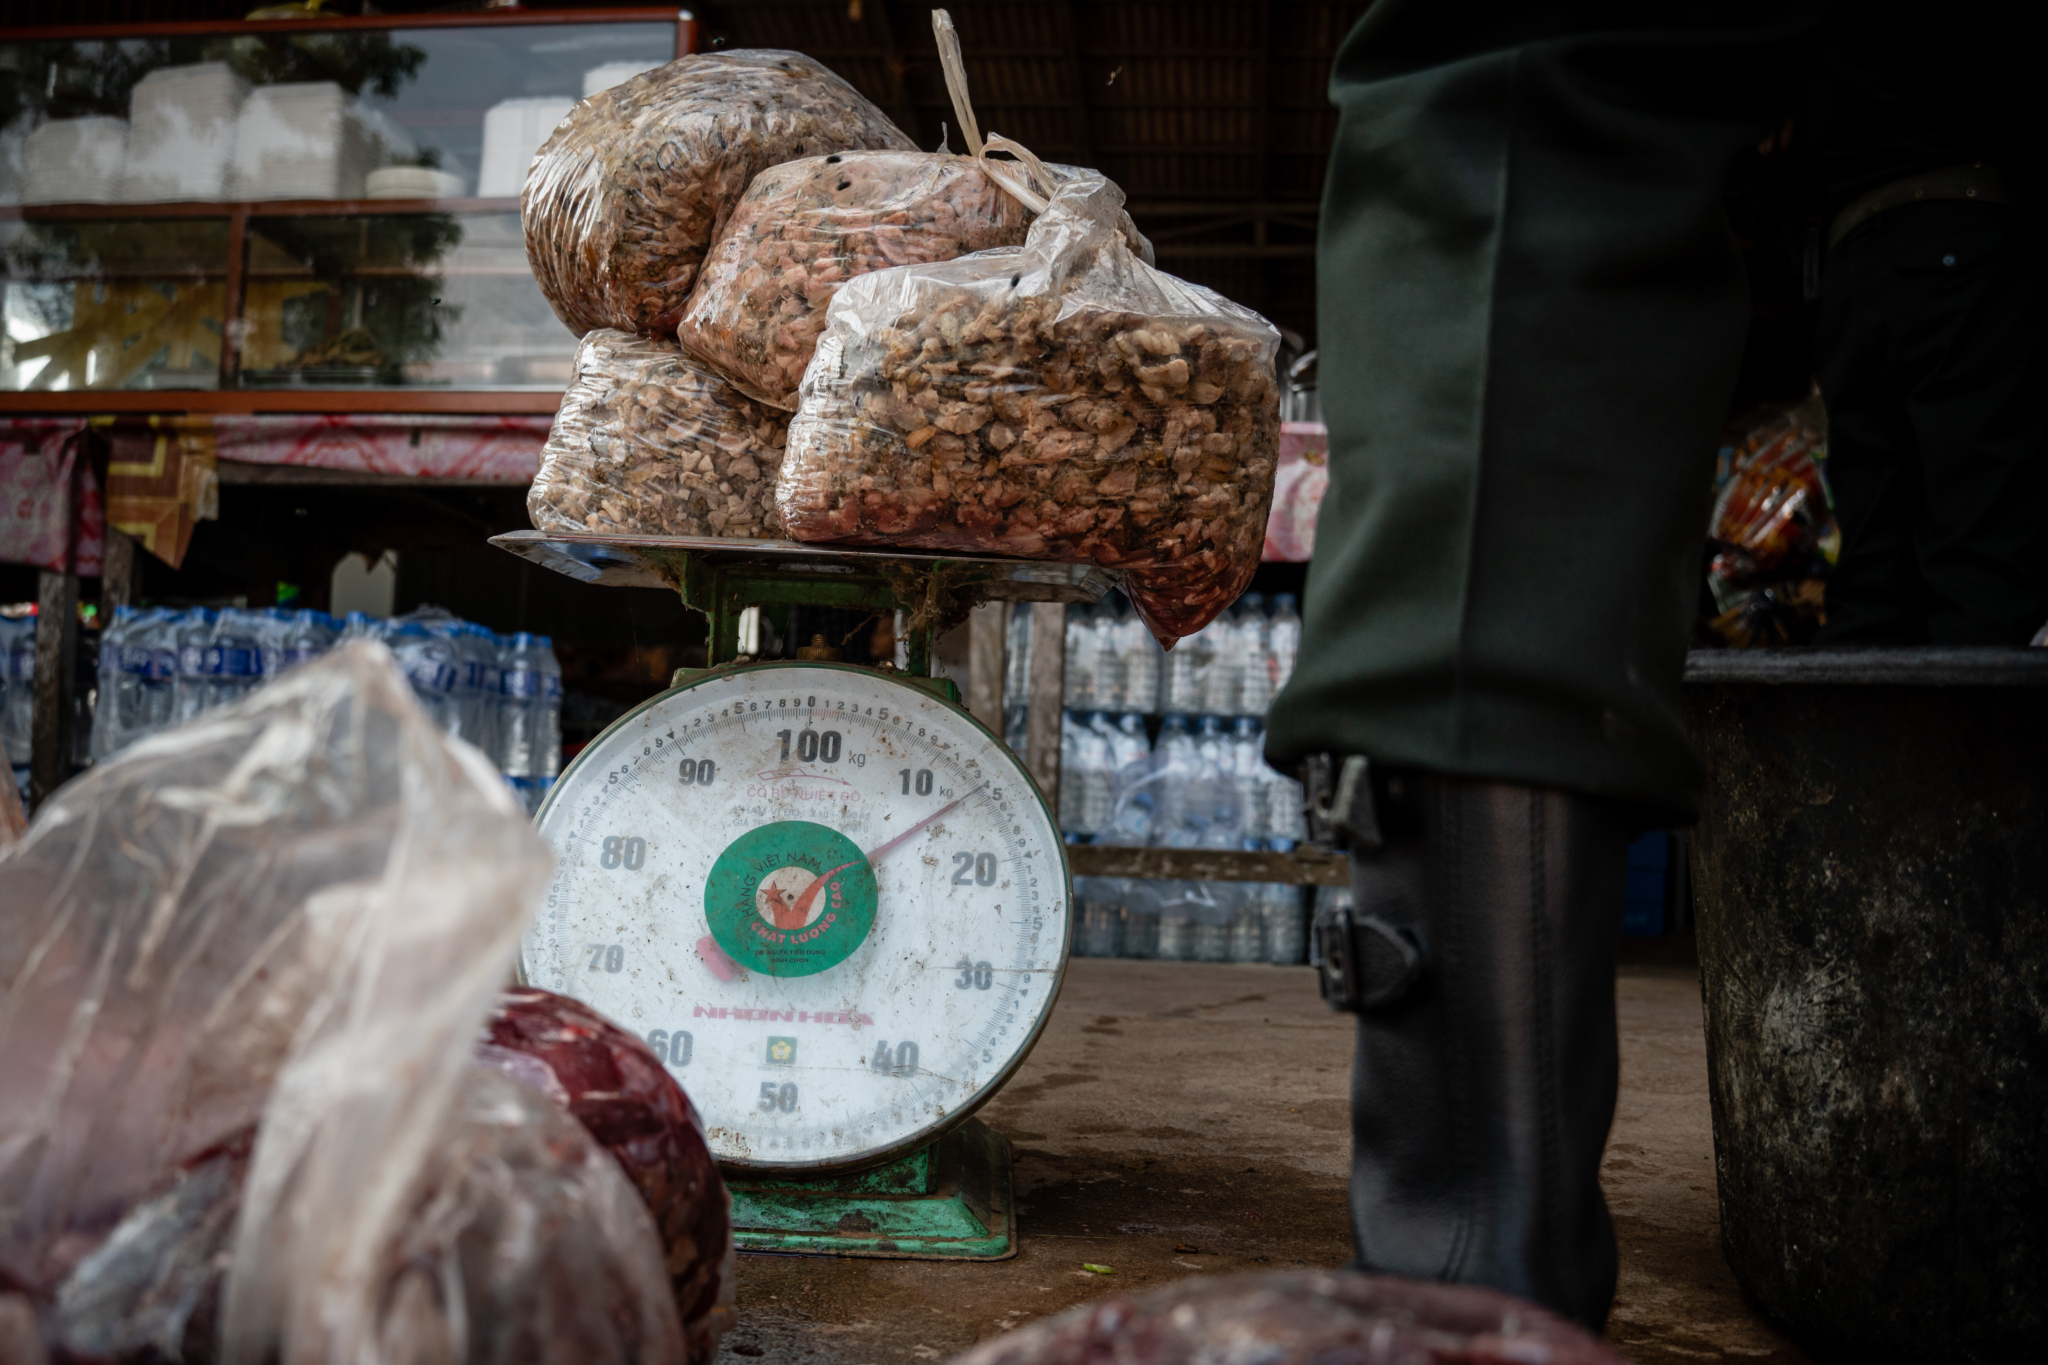 Rangers weighing wildlife meat in restaurant